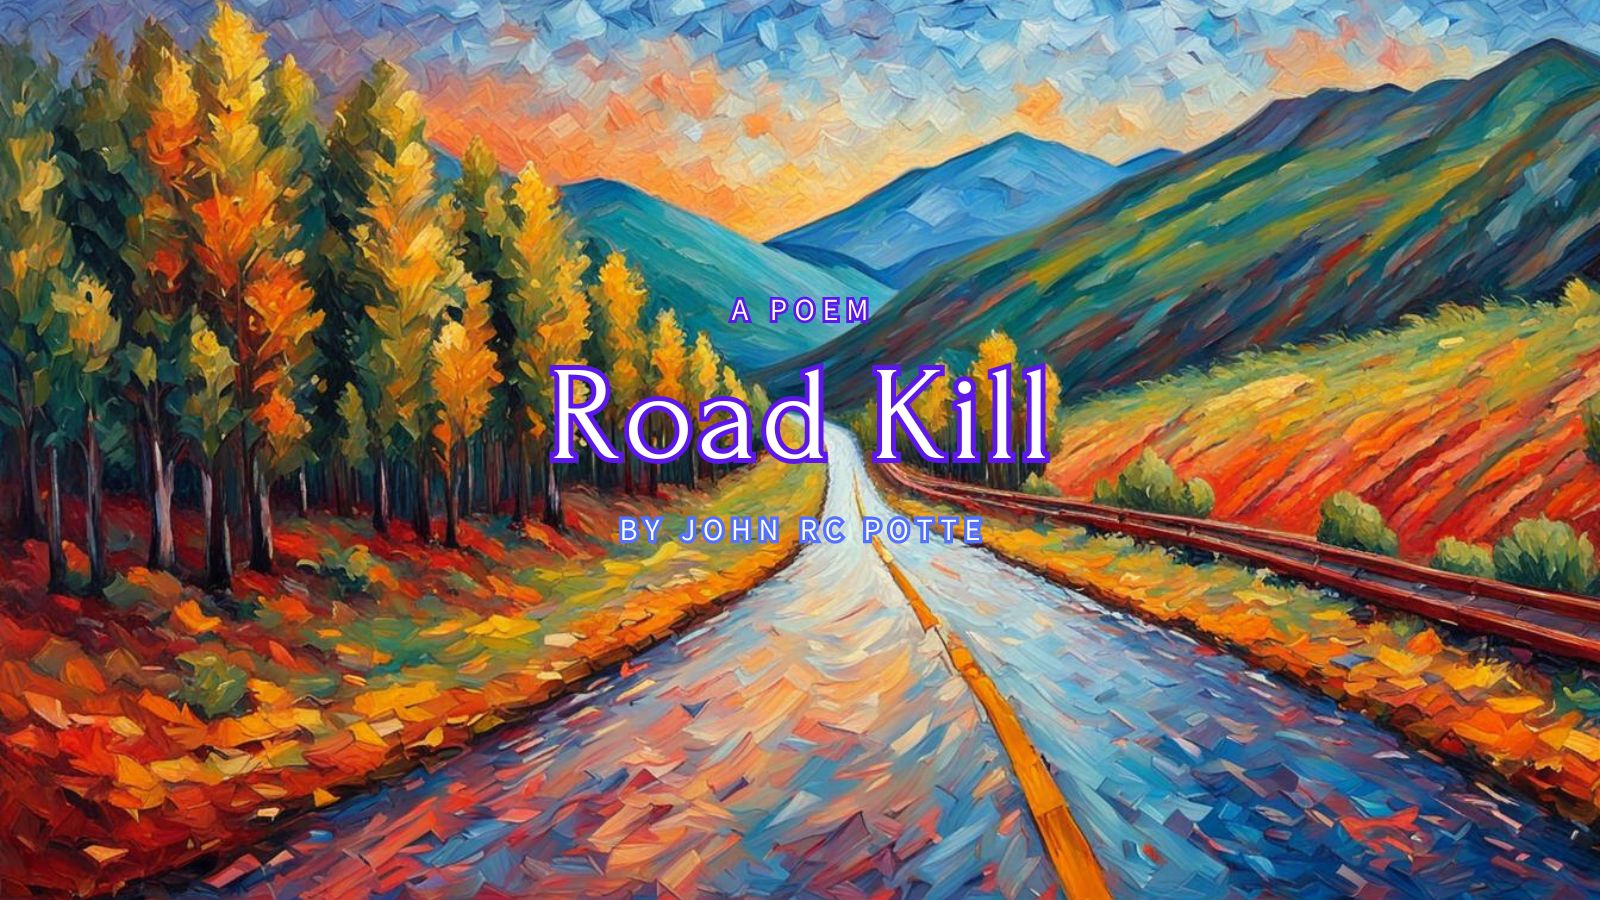 Road Kill by John RC Potter